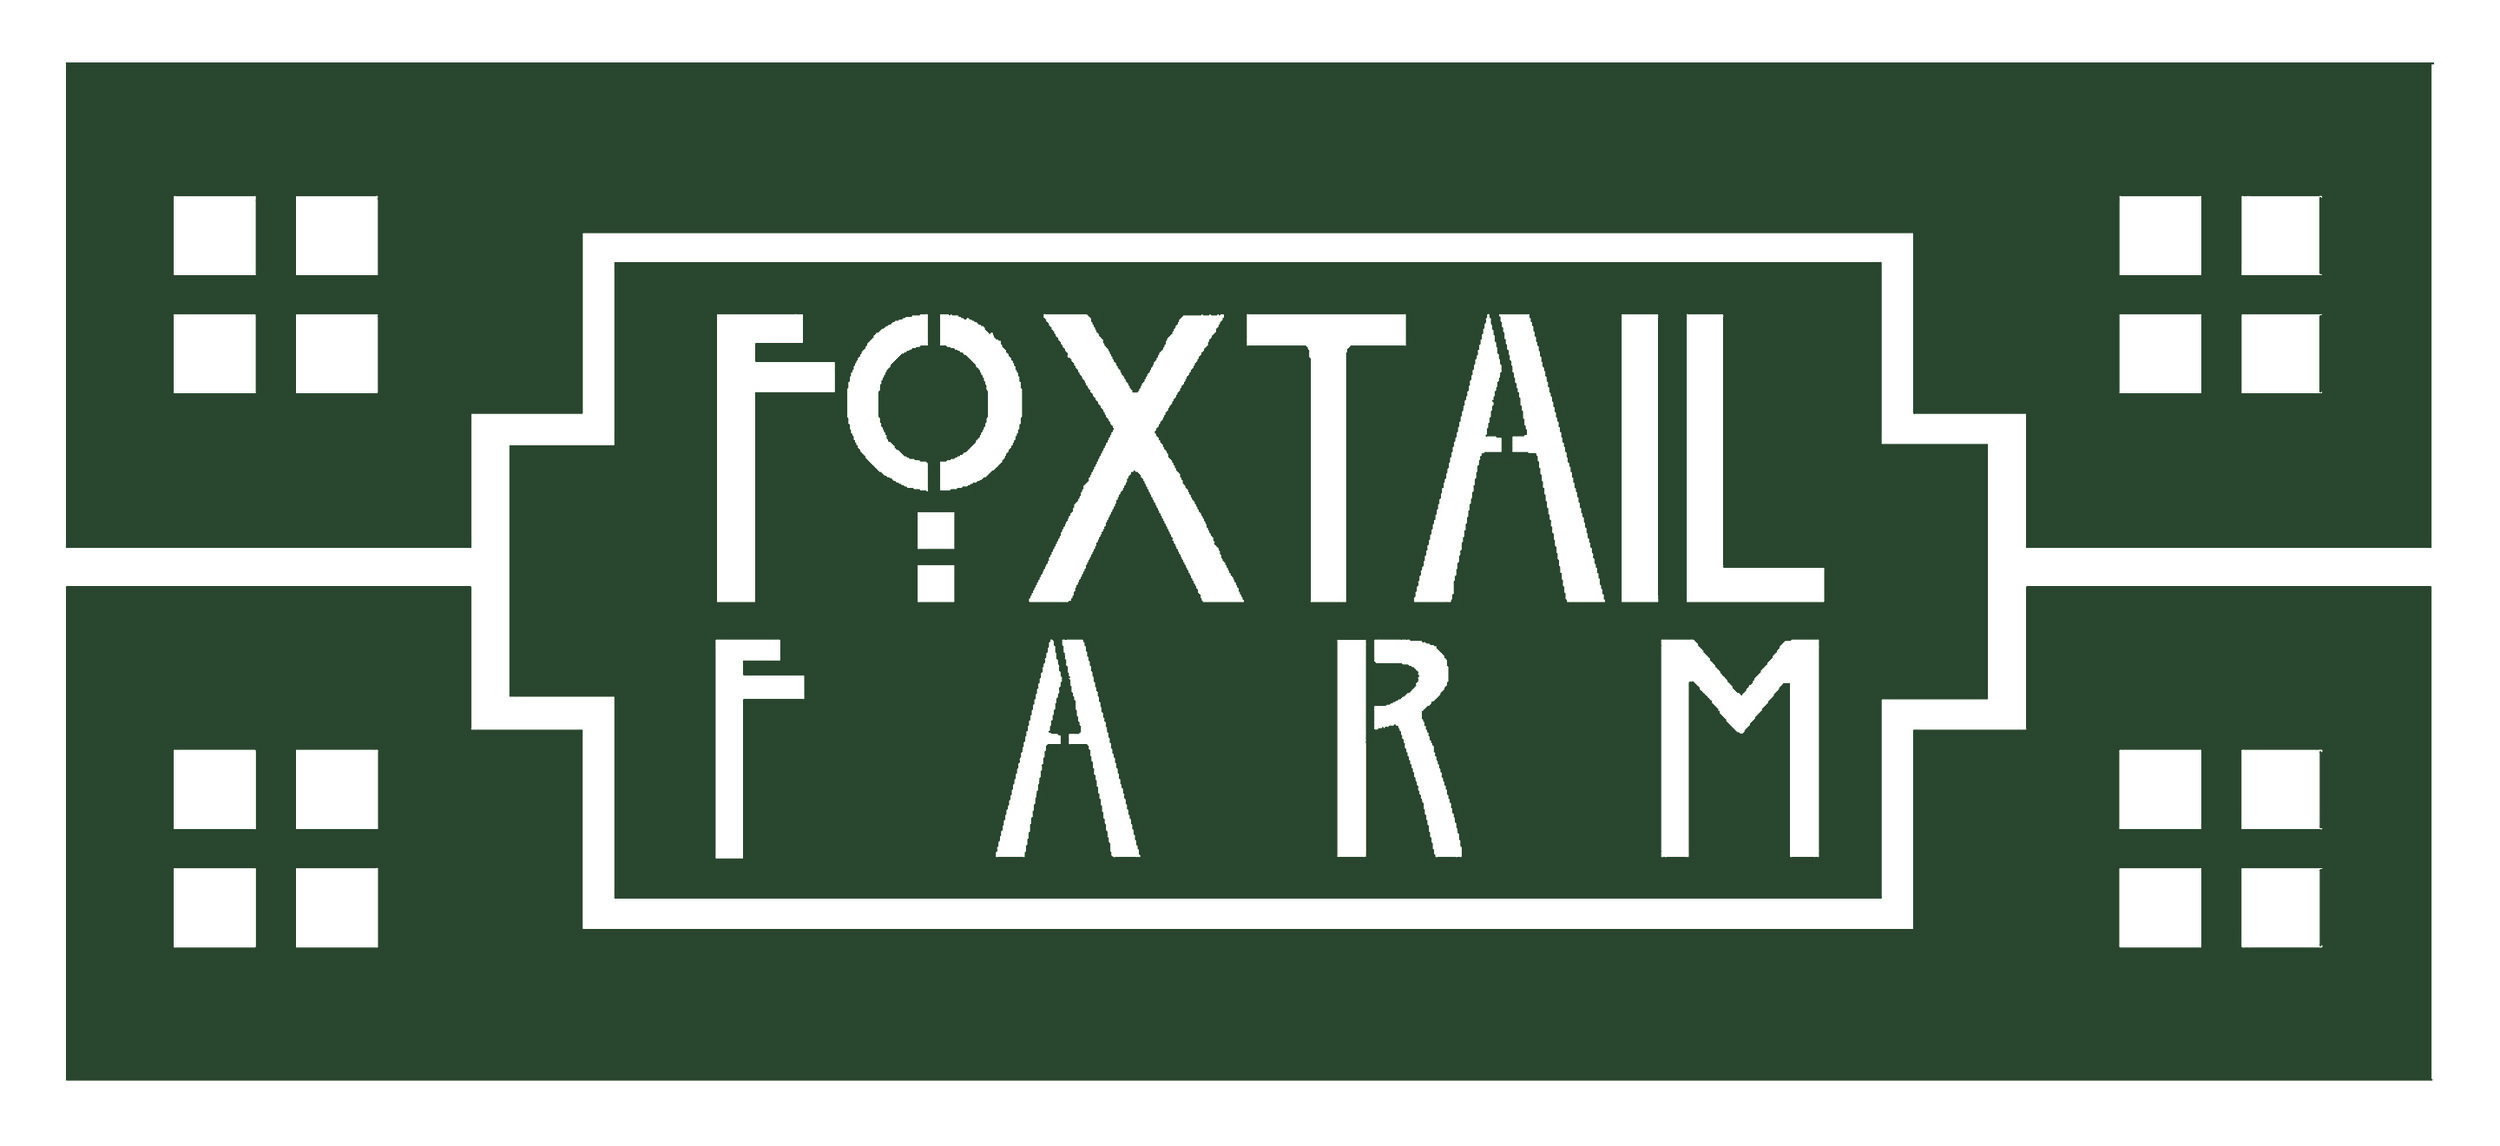 Foxtail Farm